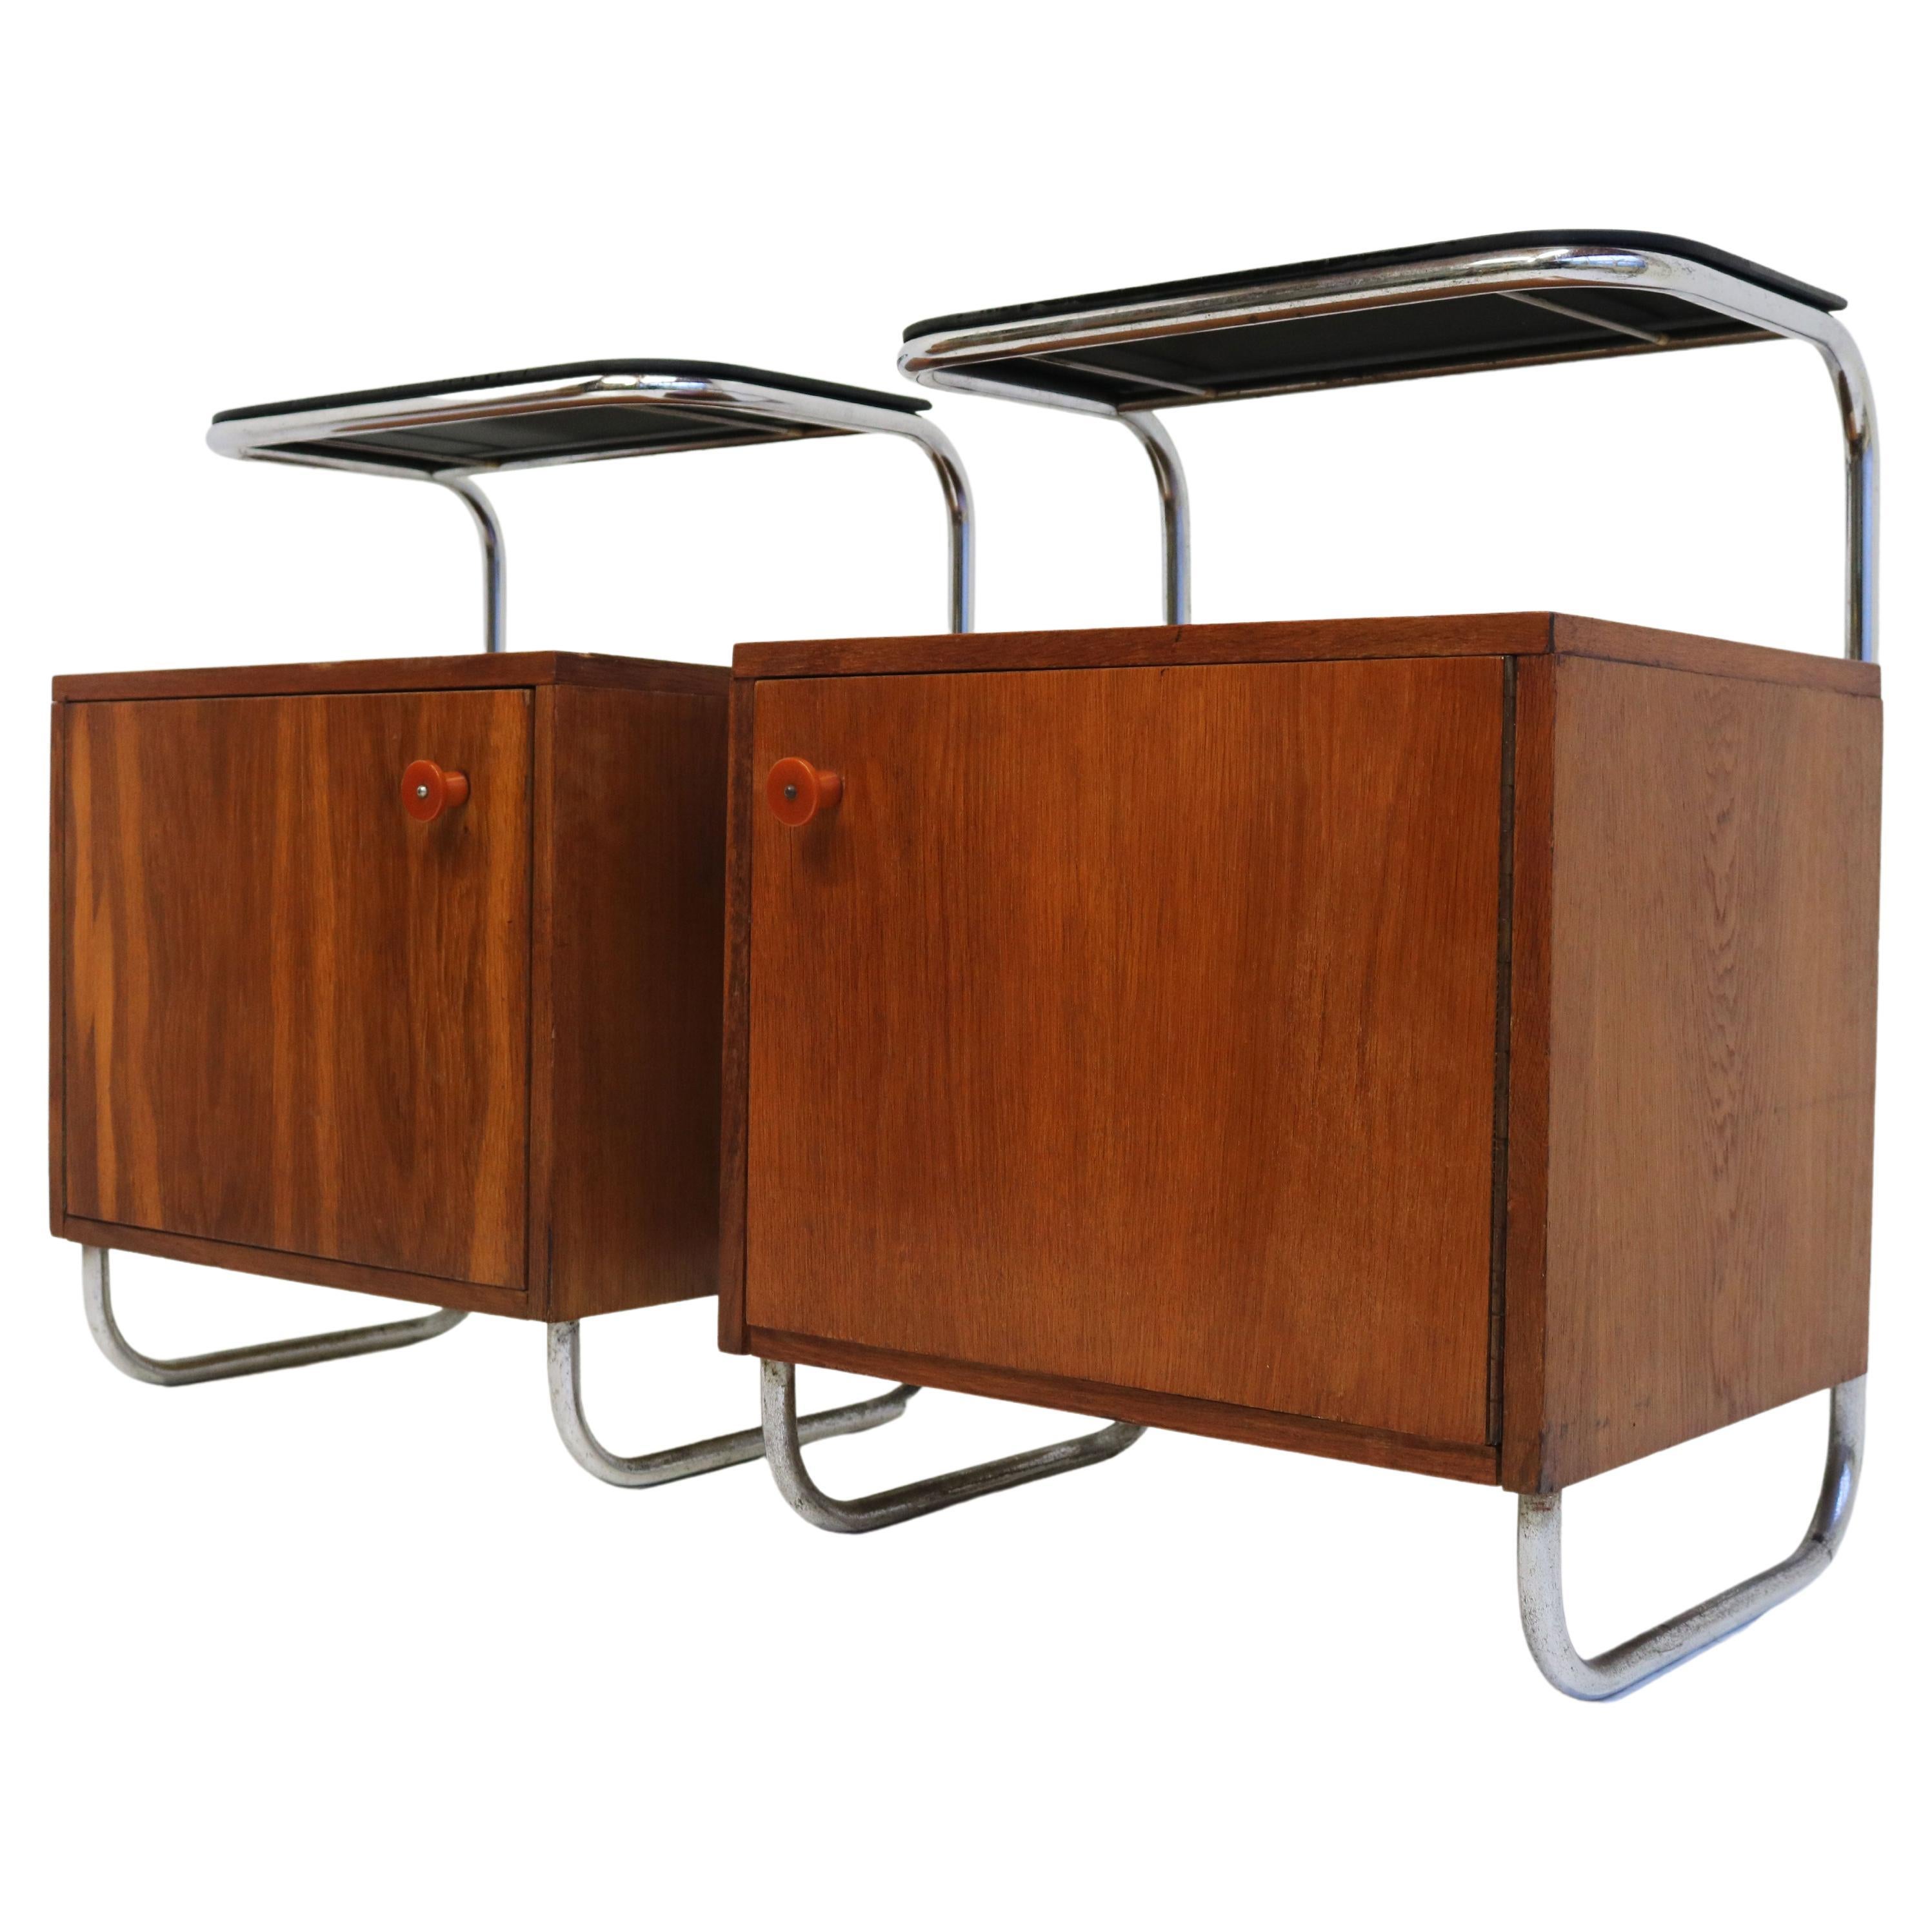 Pair of Art Deco Bauhaus Bedside Tables / Nightstands 1930 Chrome Black Glass 